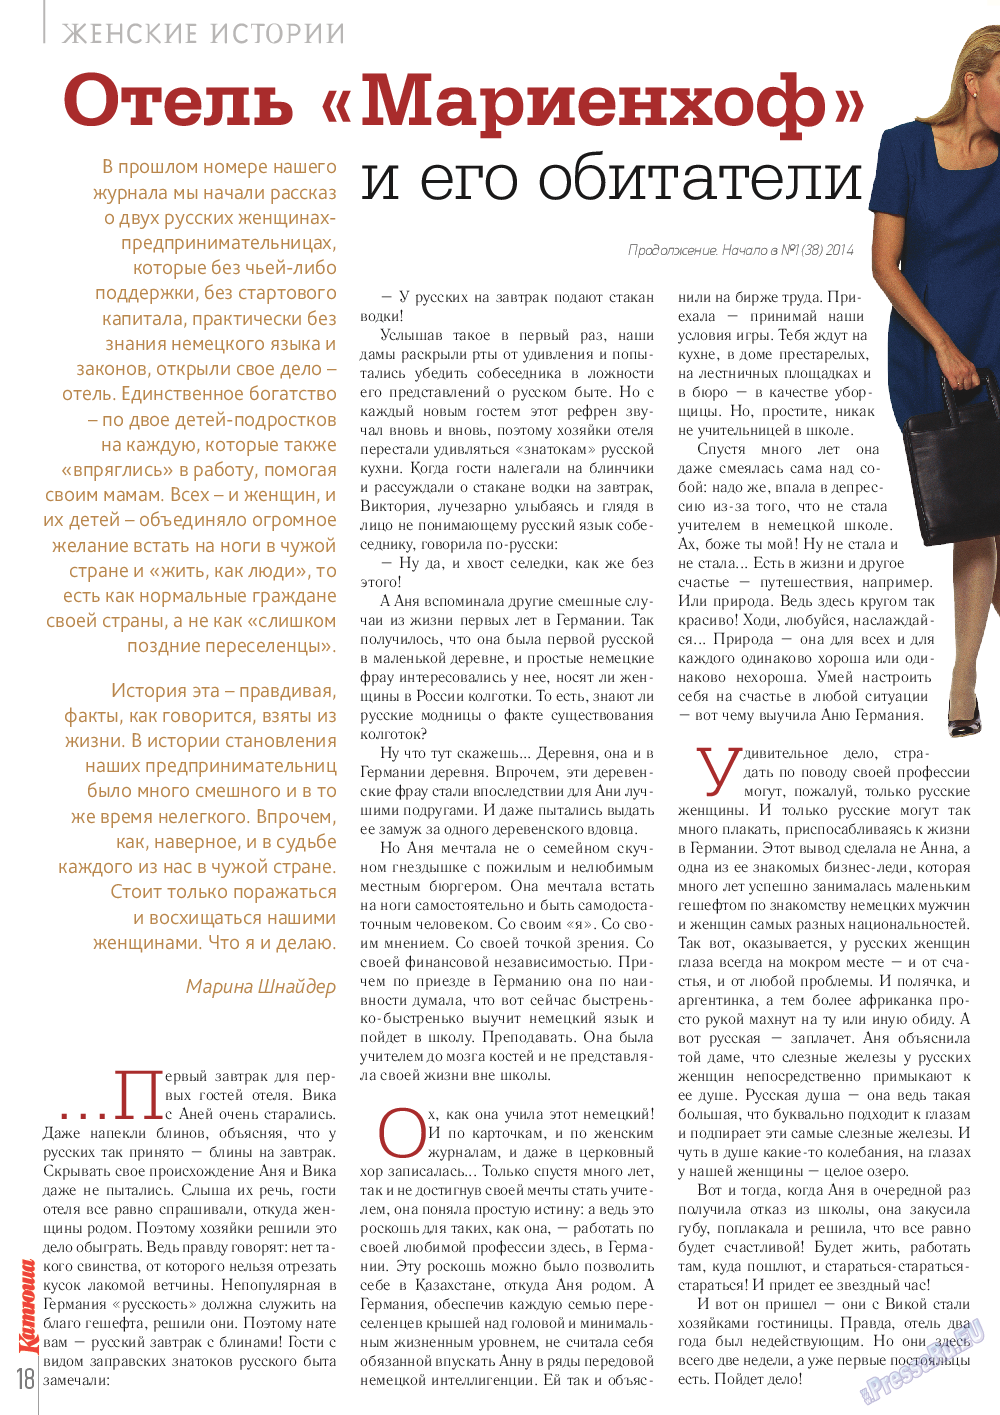 Катюша, журнал. 2014 №39 стр.18